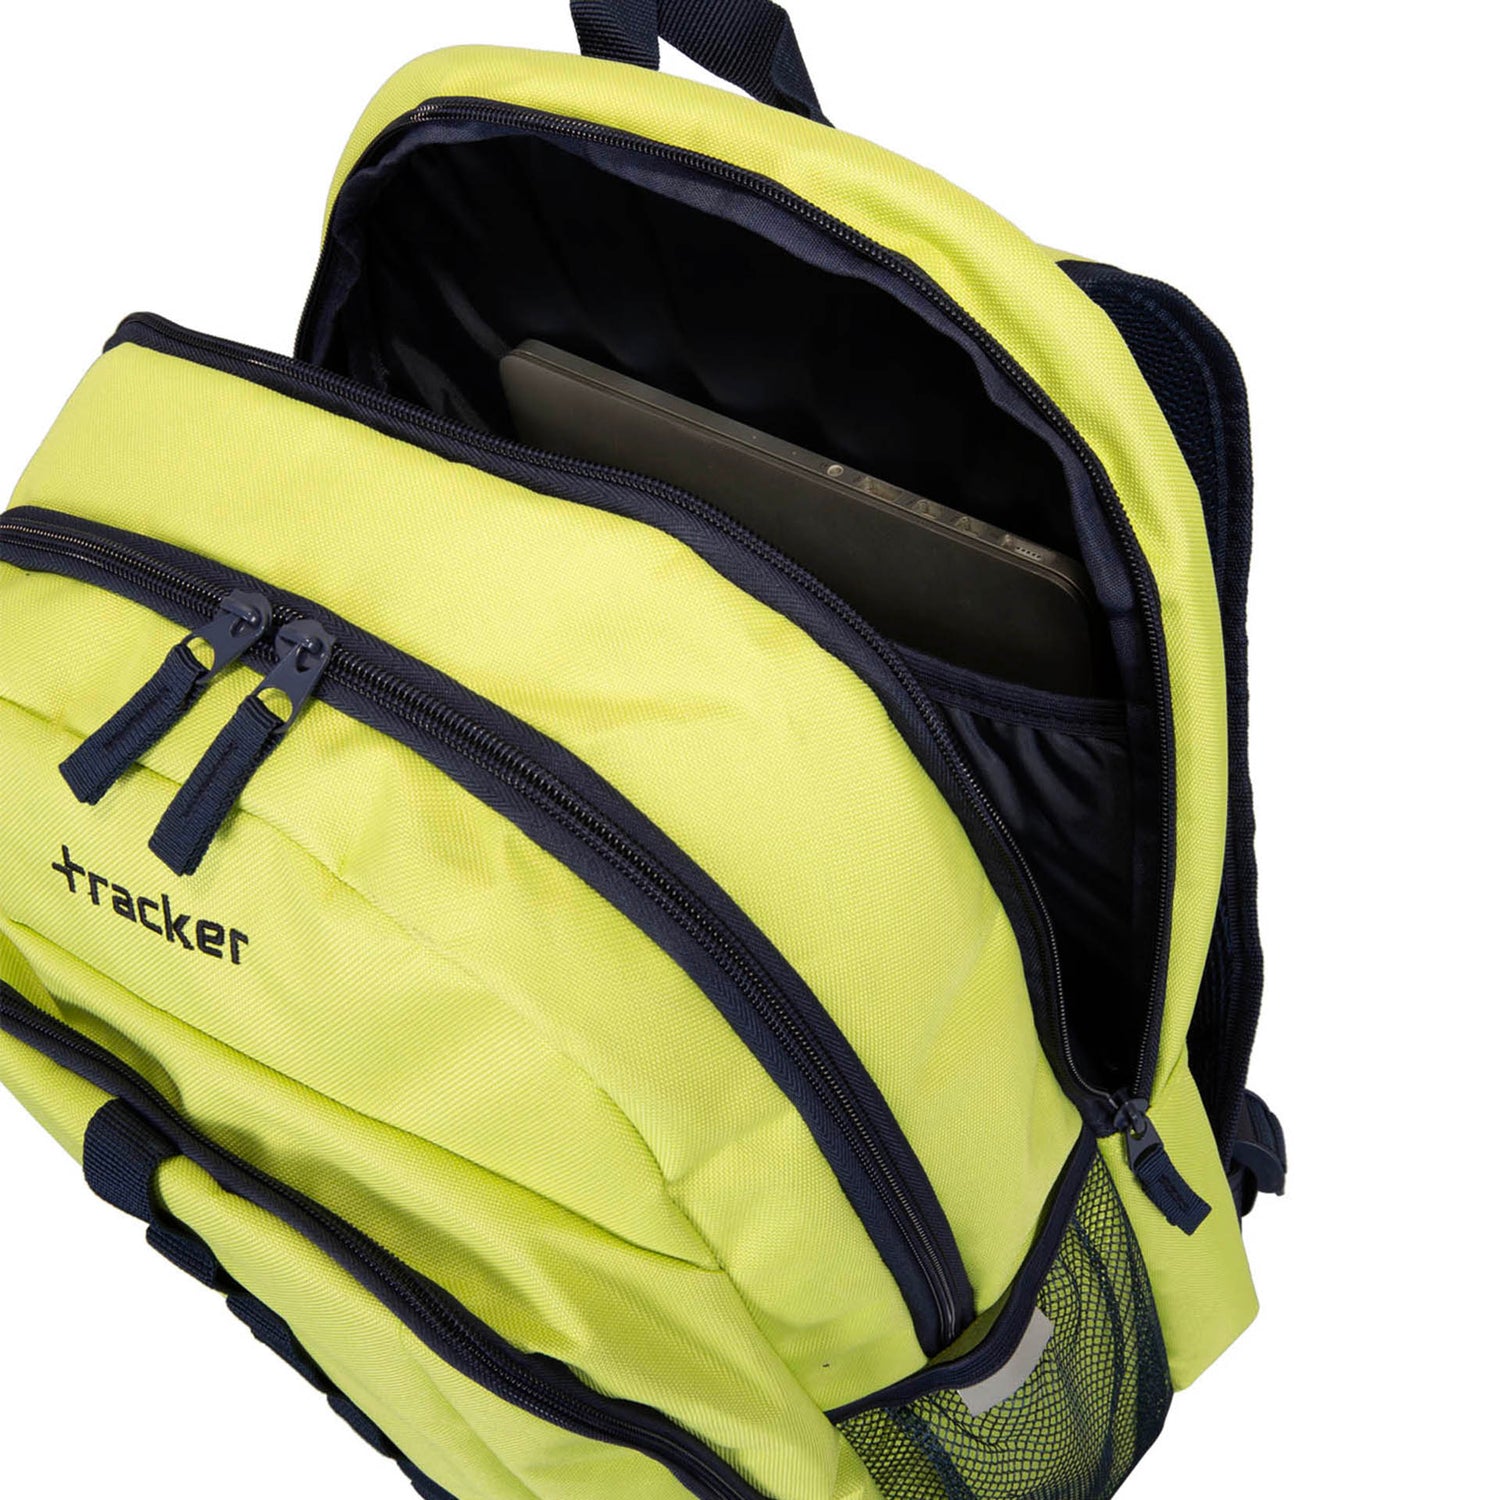 Essex 16" Laptop Backpack -  - 

        Tracker
      
